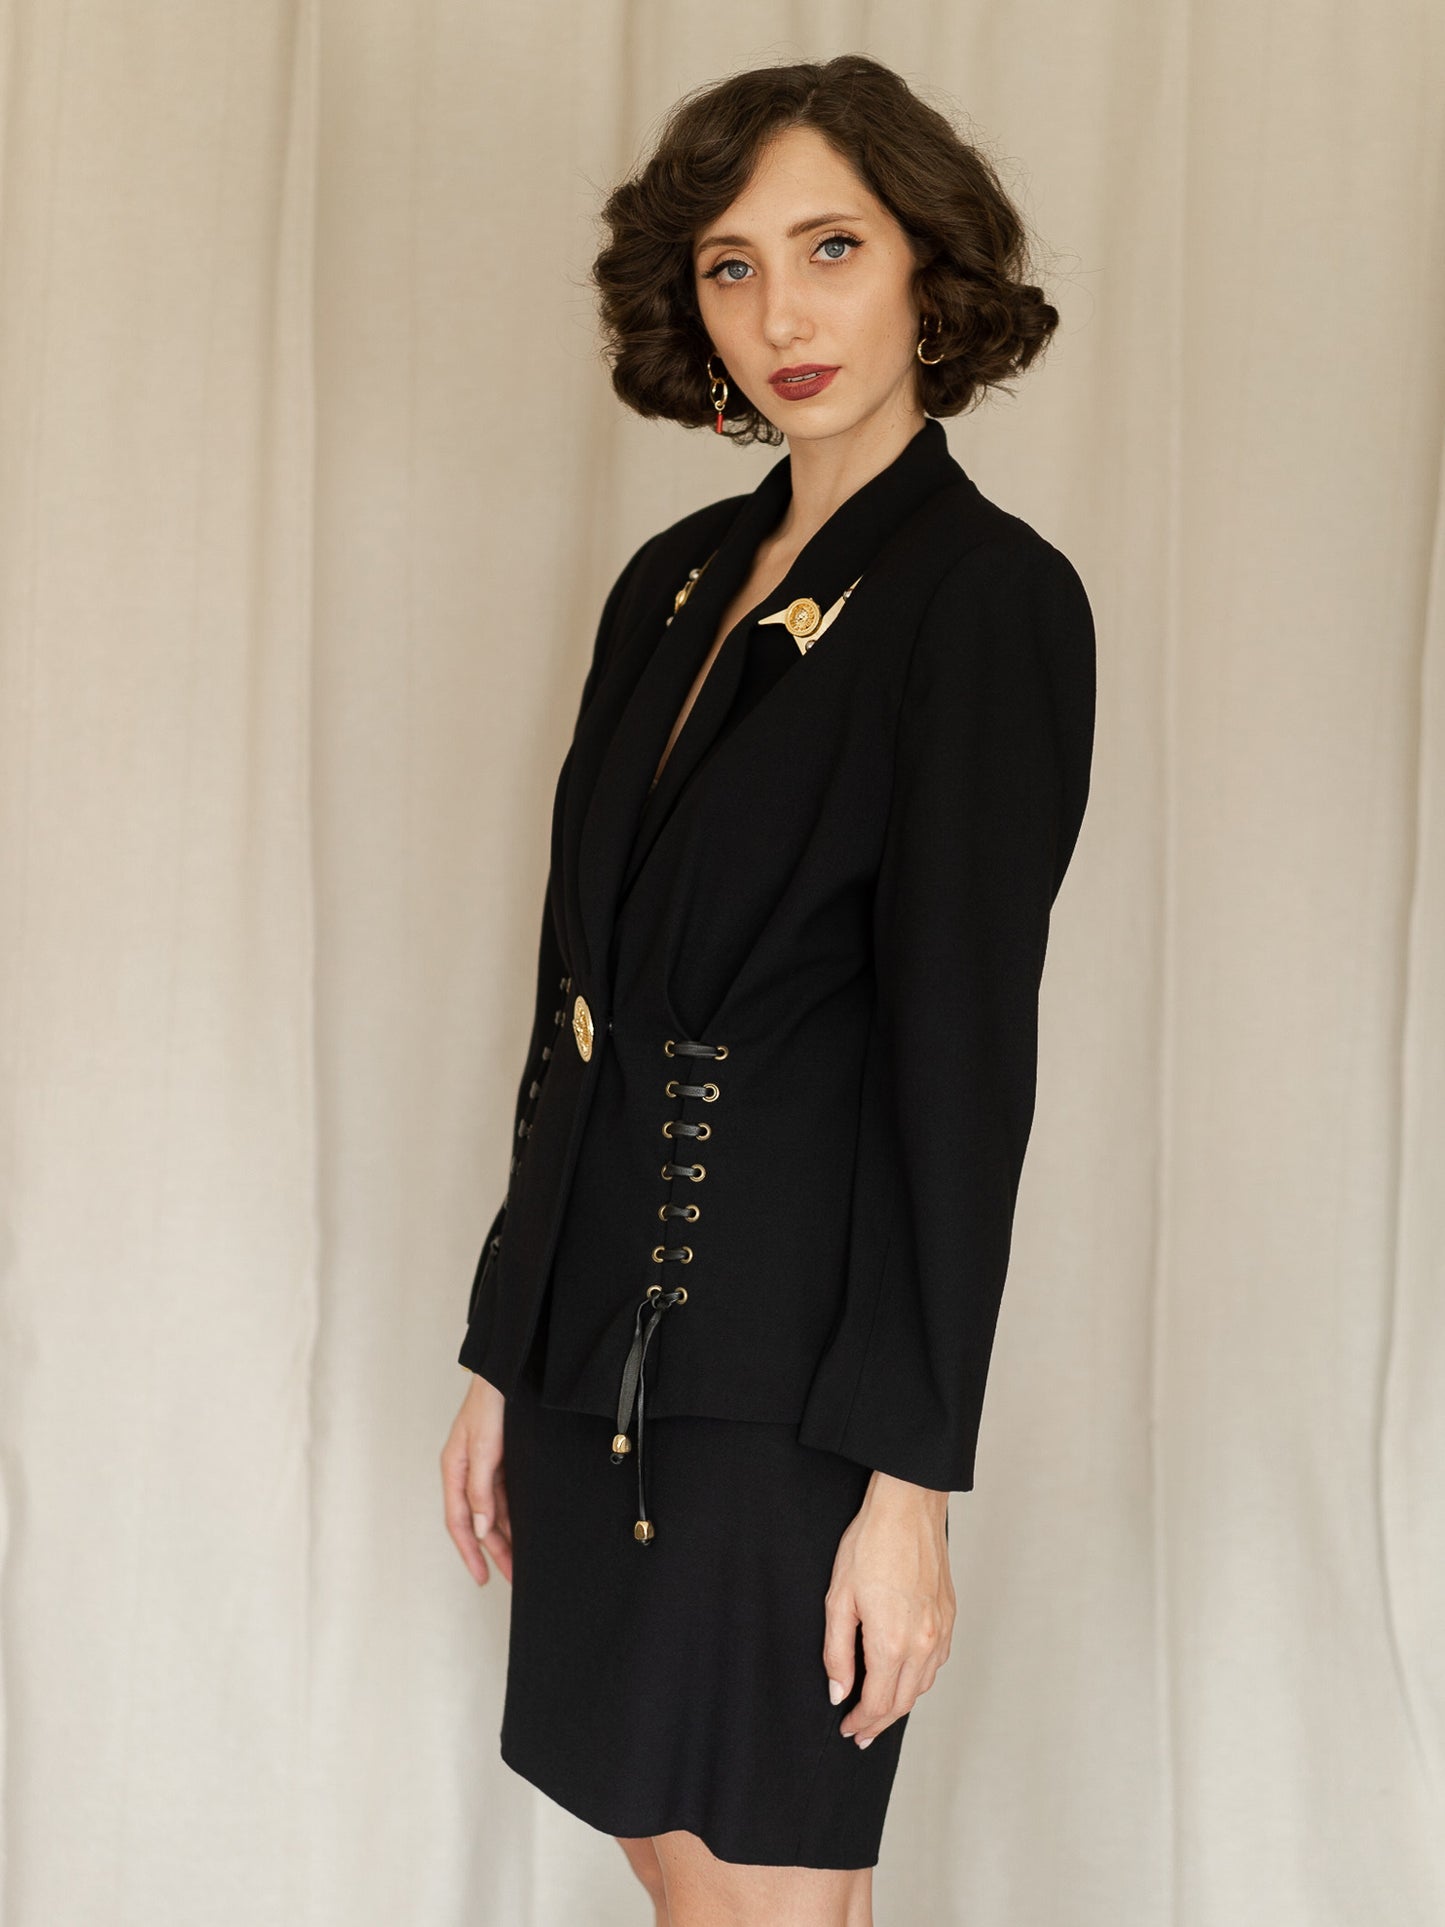 Vintage 80's Terry Paris Light Wool Black Skirt Suit (38)